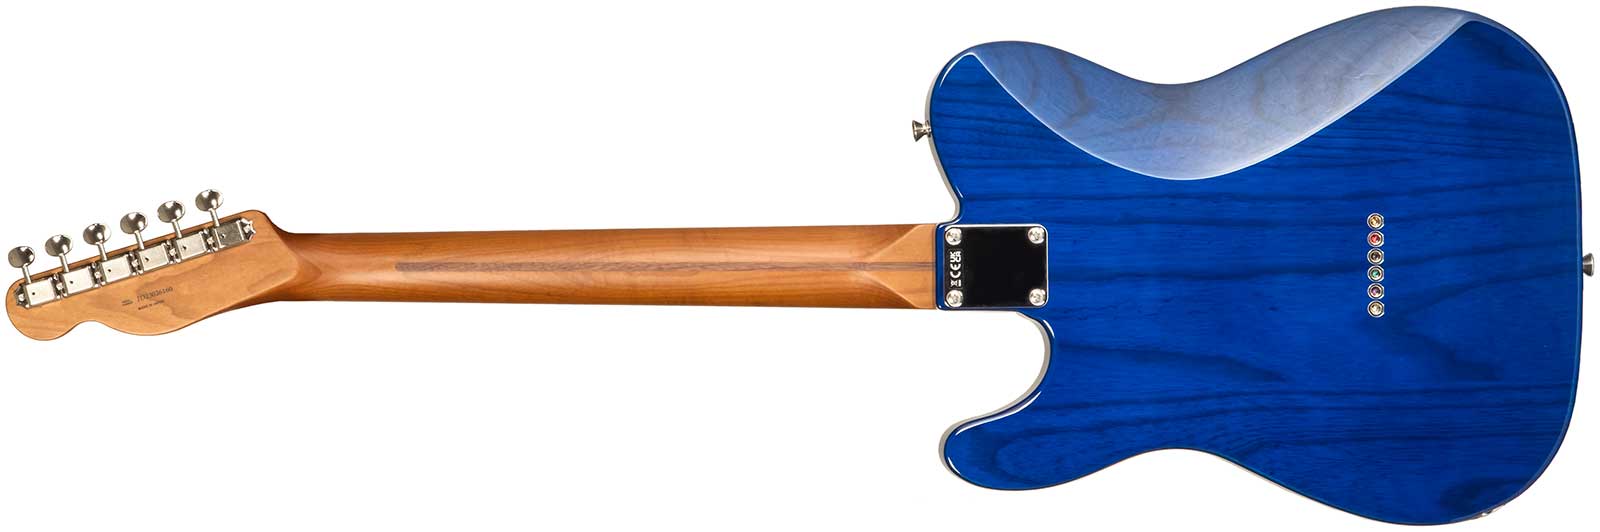 Fender Tele Hybrid Ii Jap 2s Ht Mn - Aqua Blue - Tel shape electric guitar - Variation 1